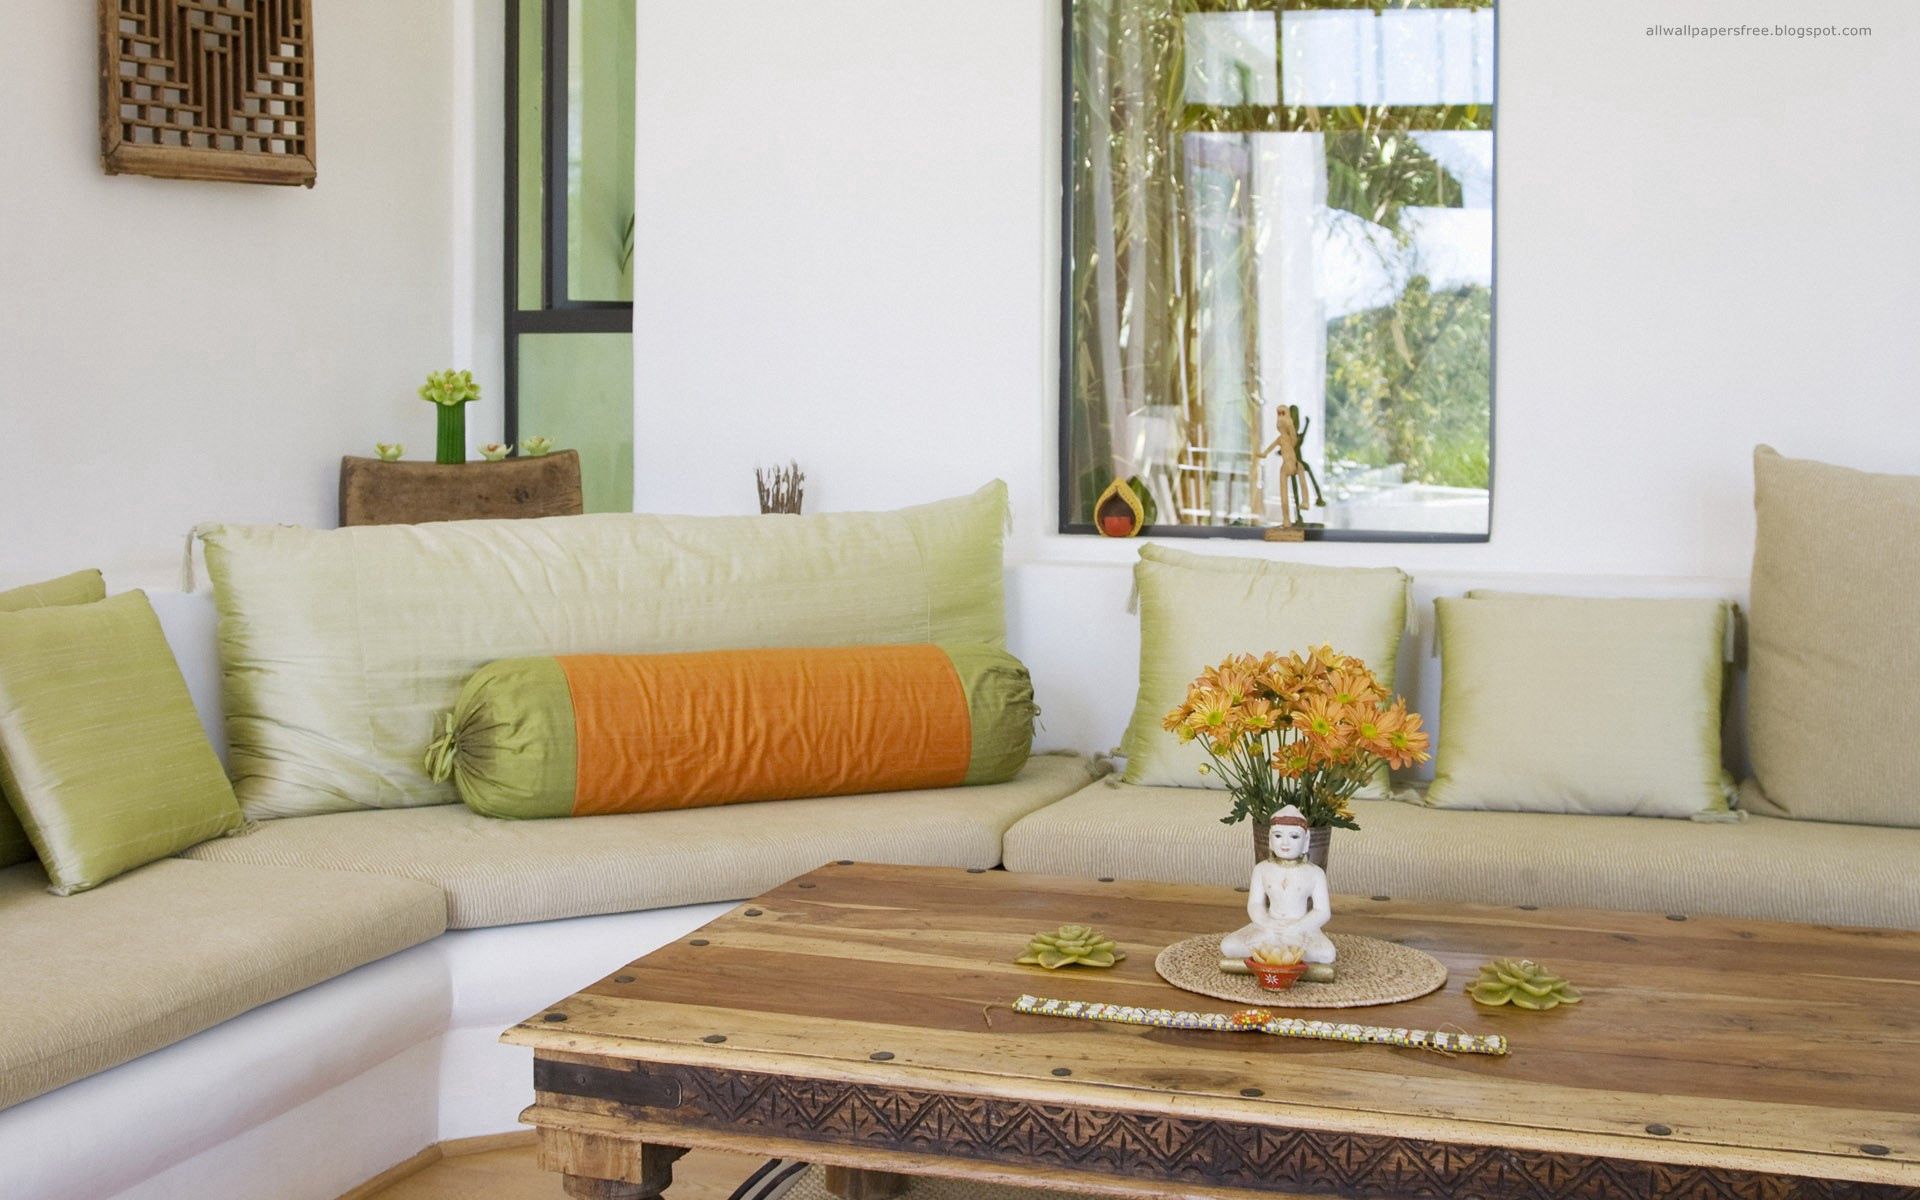 table, miscellanea, miscellaneous, design, sofa, coziness, comfort, cushions, pillows